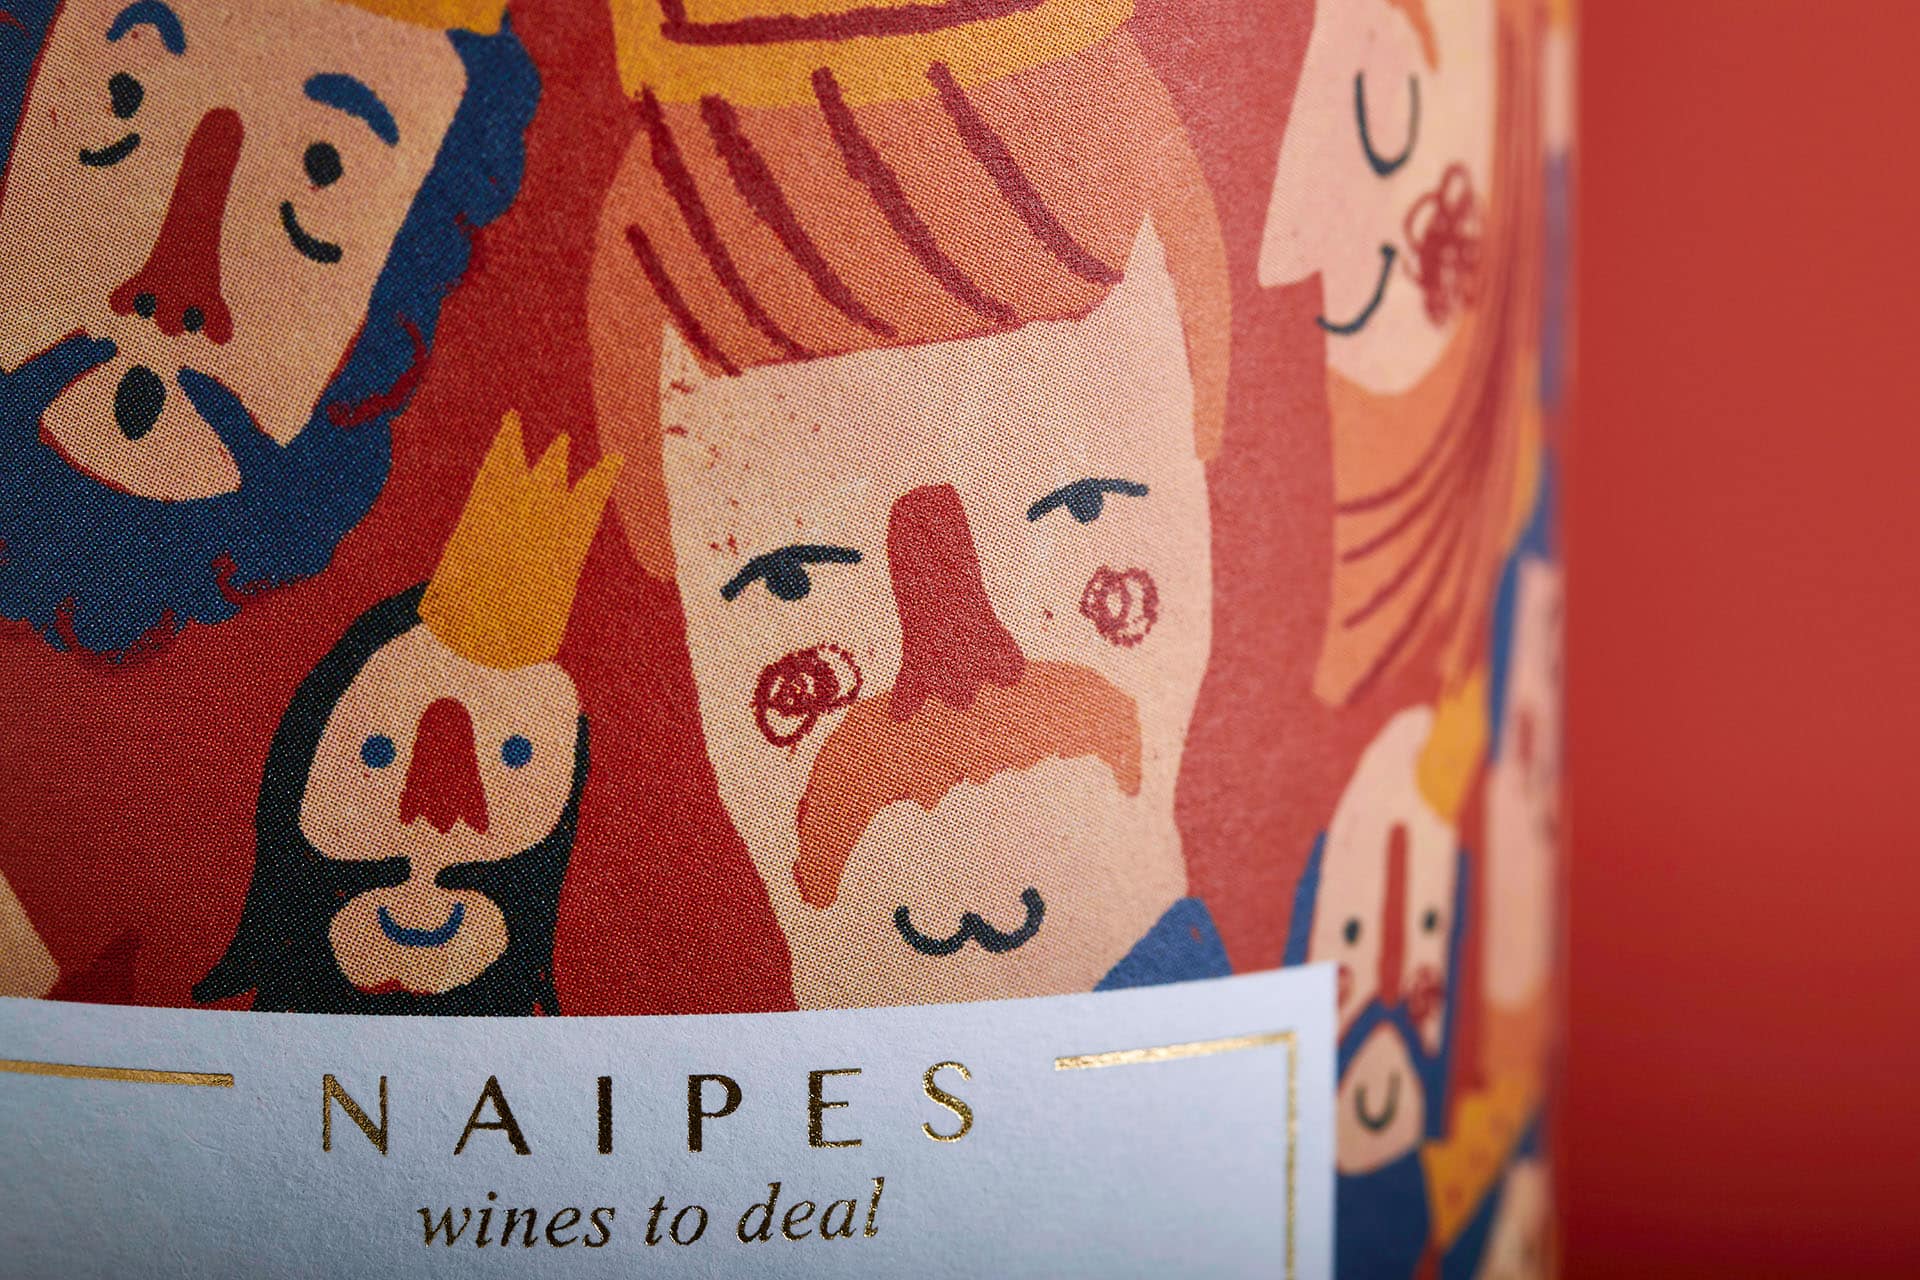 Naipes wines label - etiqueta de vino